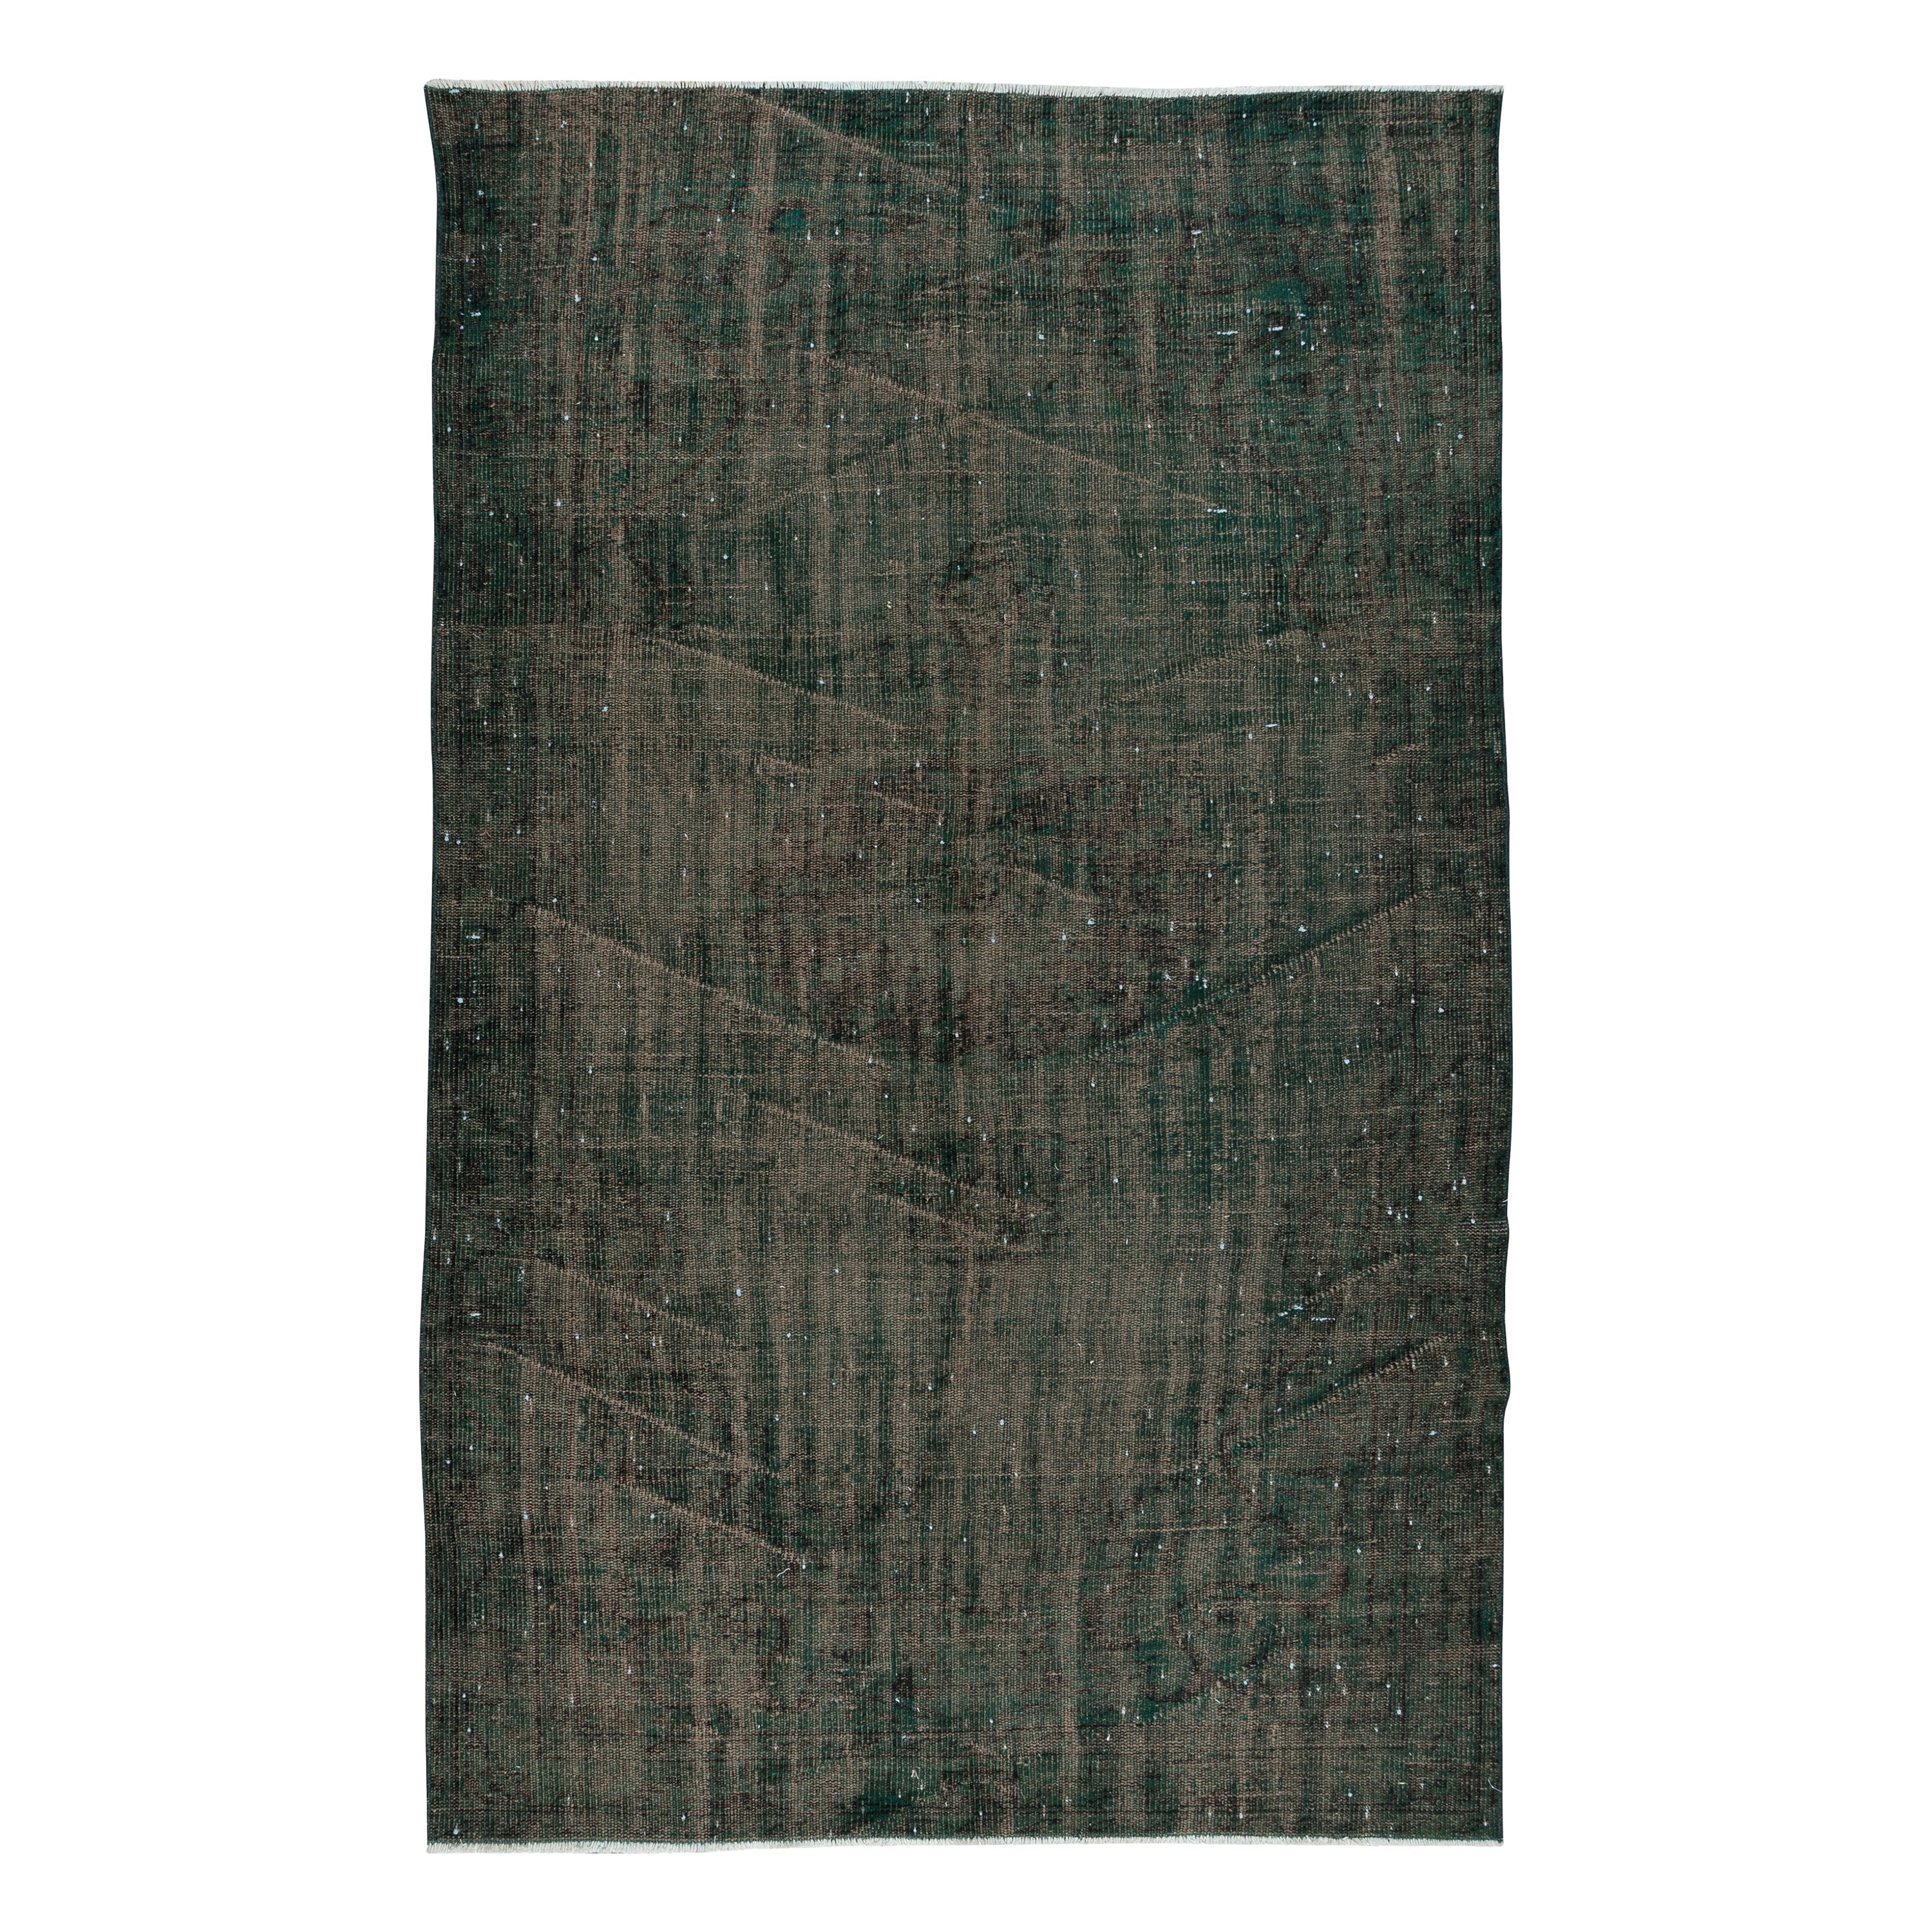 5.3x8.5 Ft Distressed Dark Green Rug, Handmade Turkish Shabby Chic Carpet For Sale